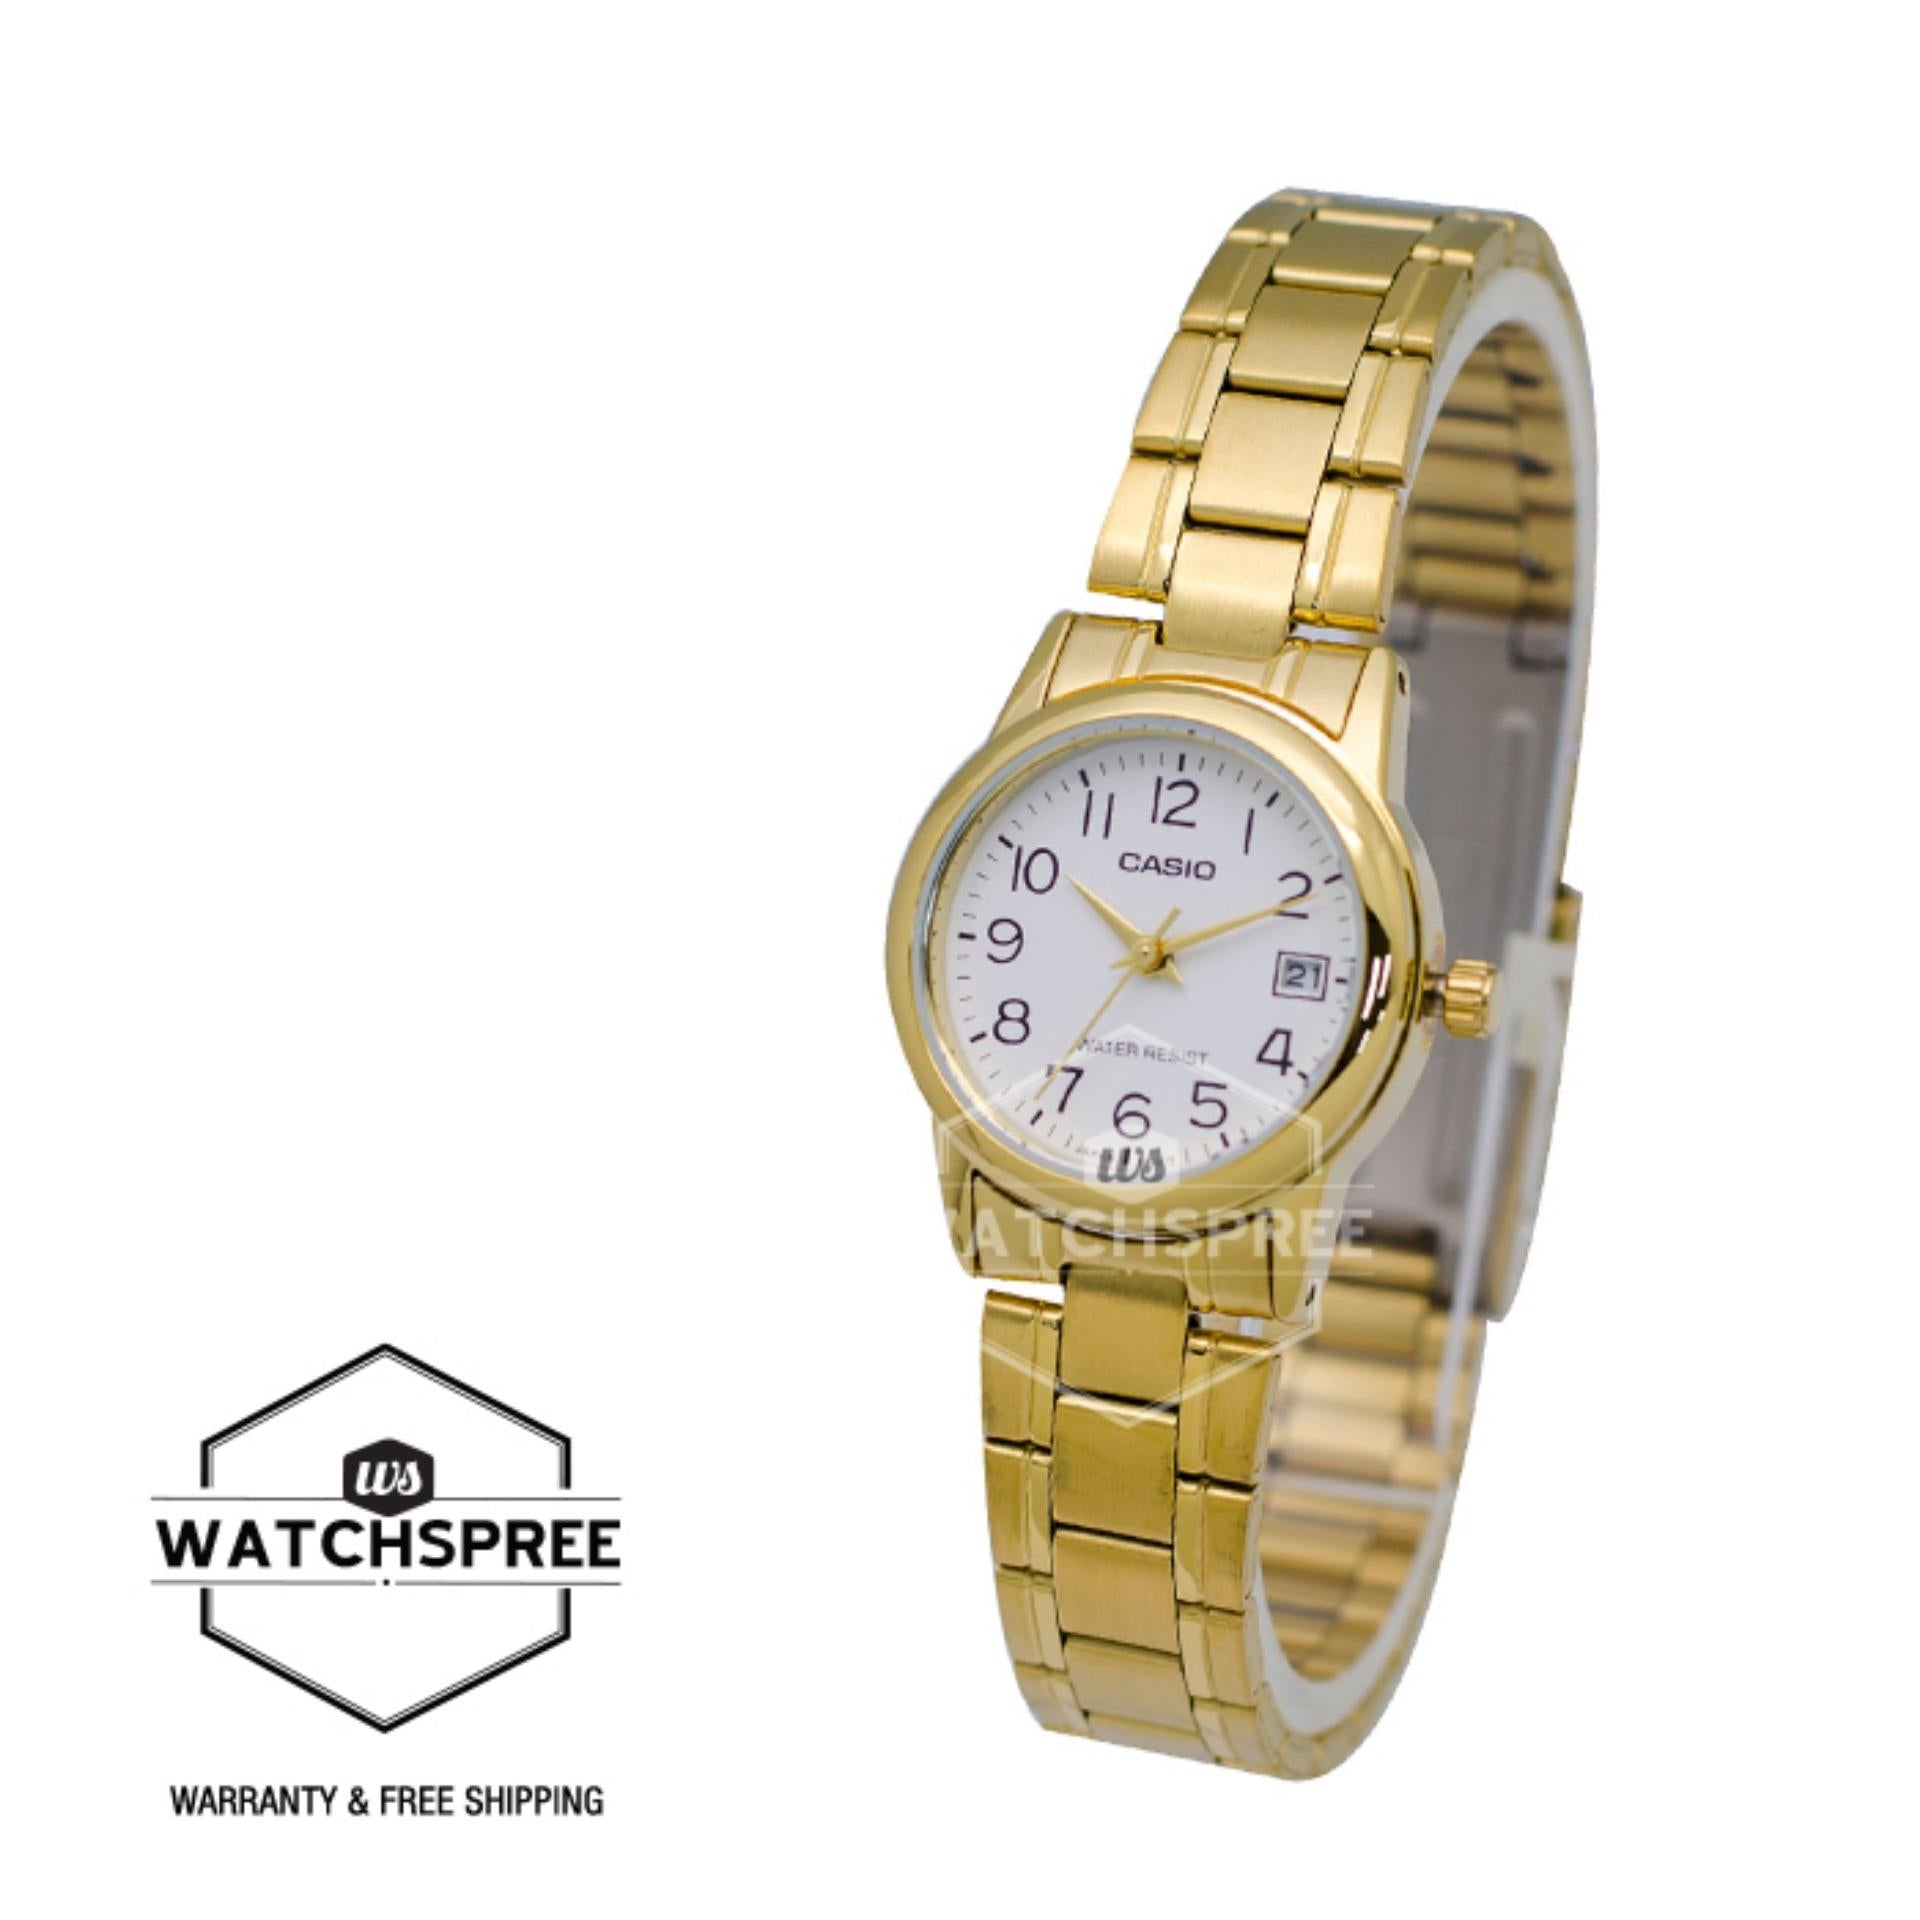 Casio Ladies' Standard Analog Gold Tone Stainless Steel Band Watch LTPV002G-7B2 LTP-V002G-7B2